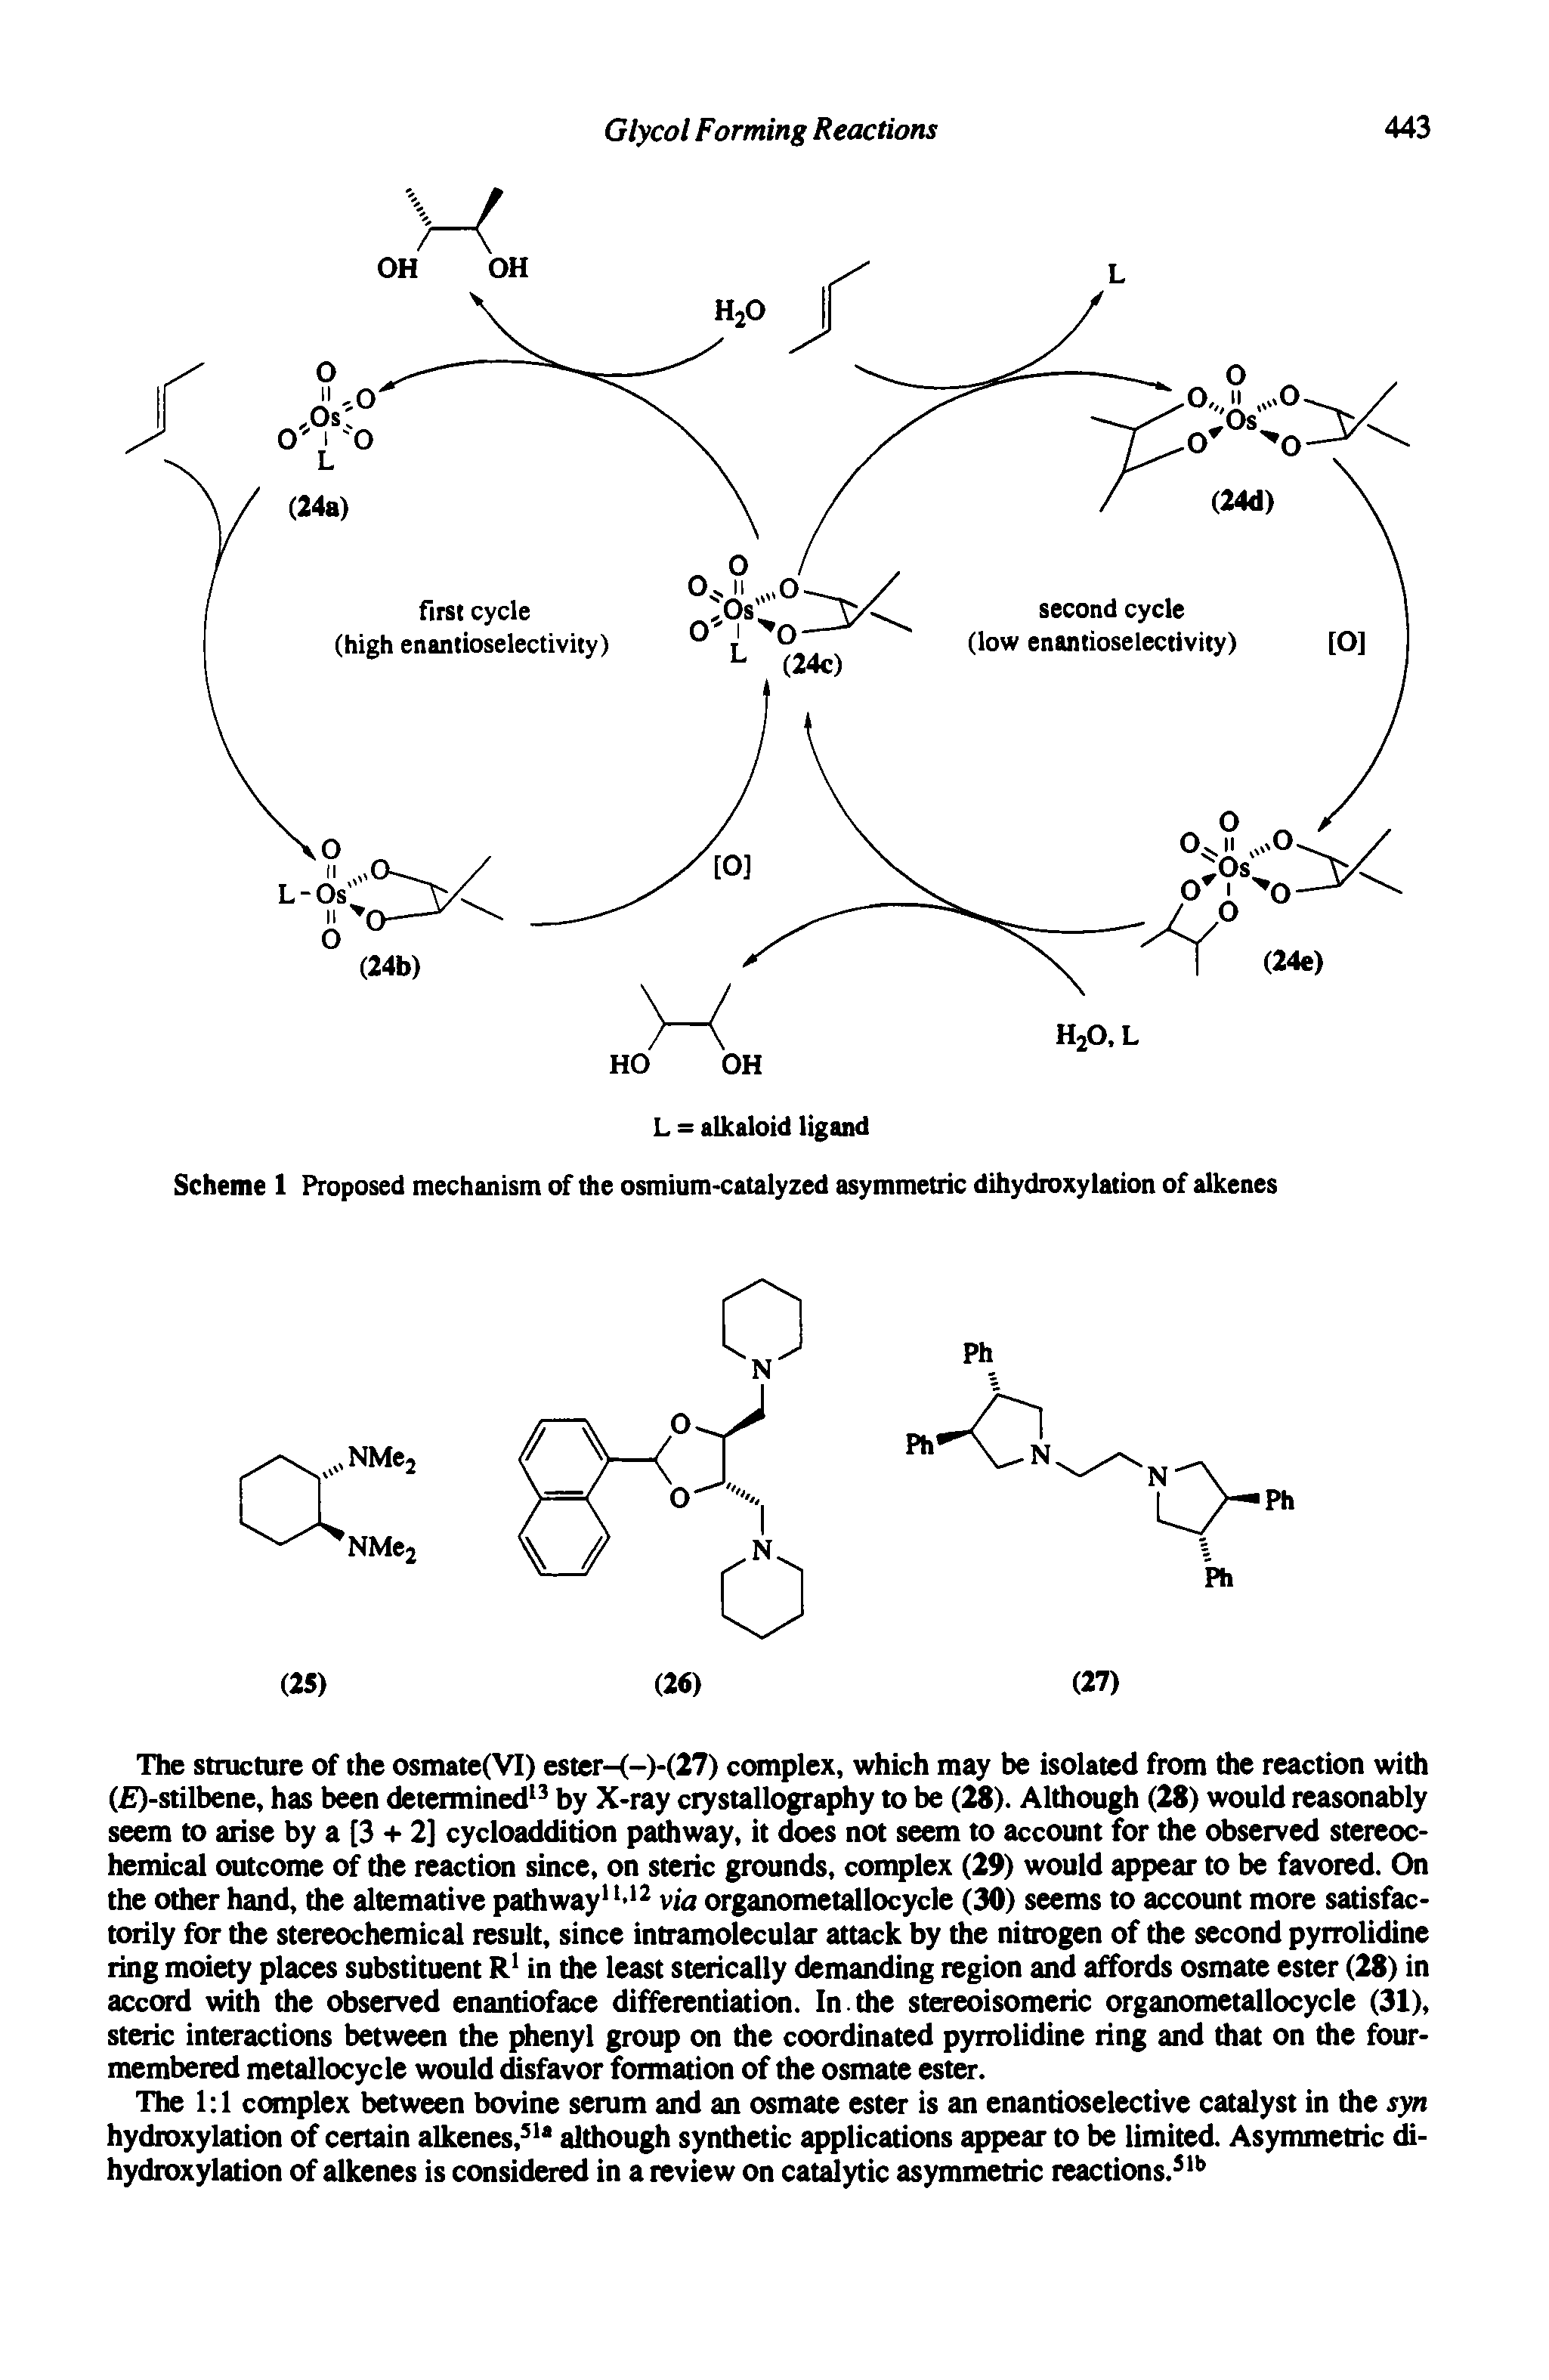 Scheme 1 Proposed mechanism of the osmium-catalyzed asymmetric dihydioxylation of alkenes...